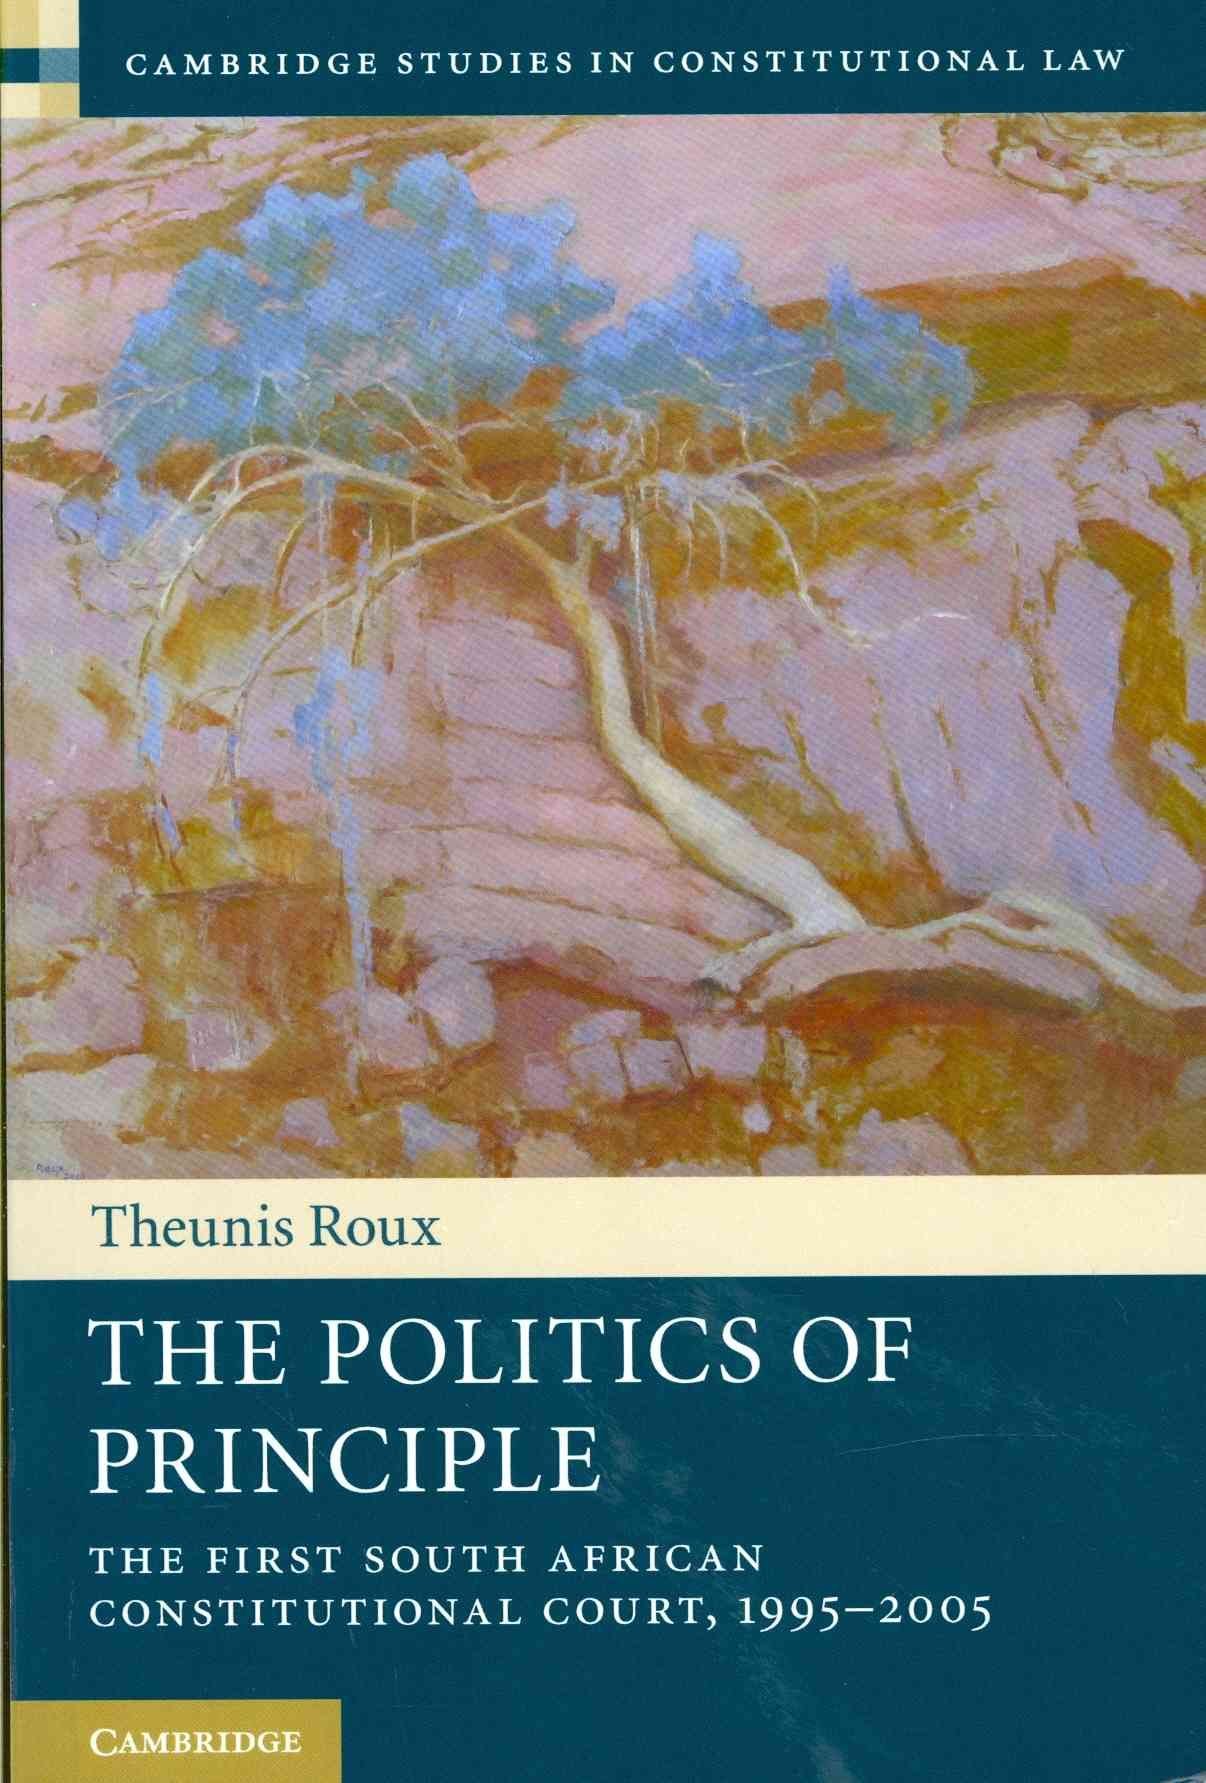 The Politics of Principle